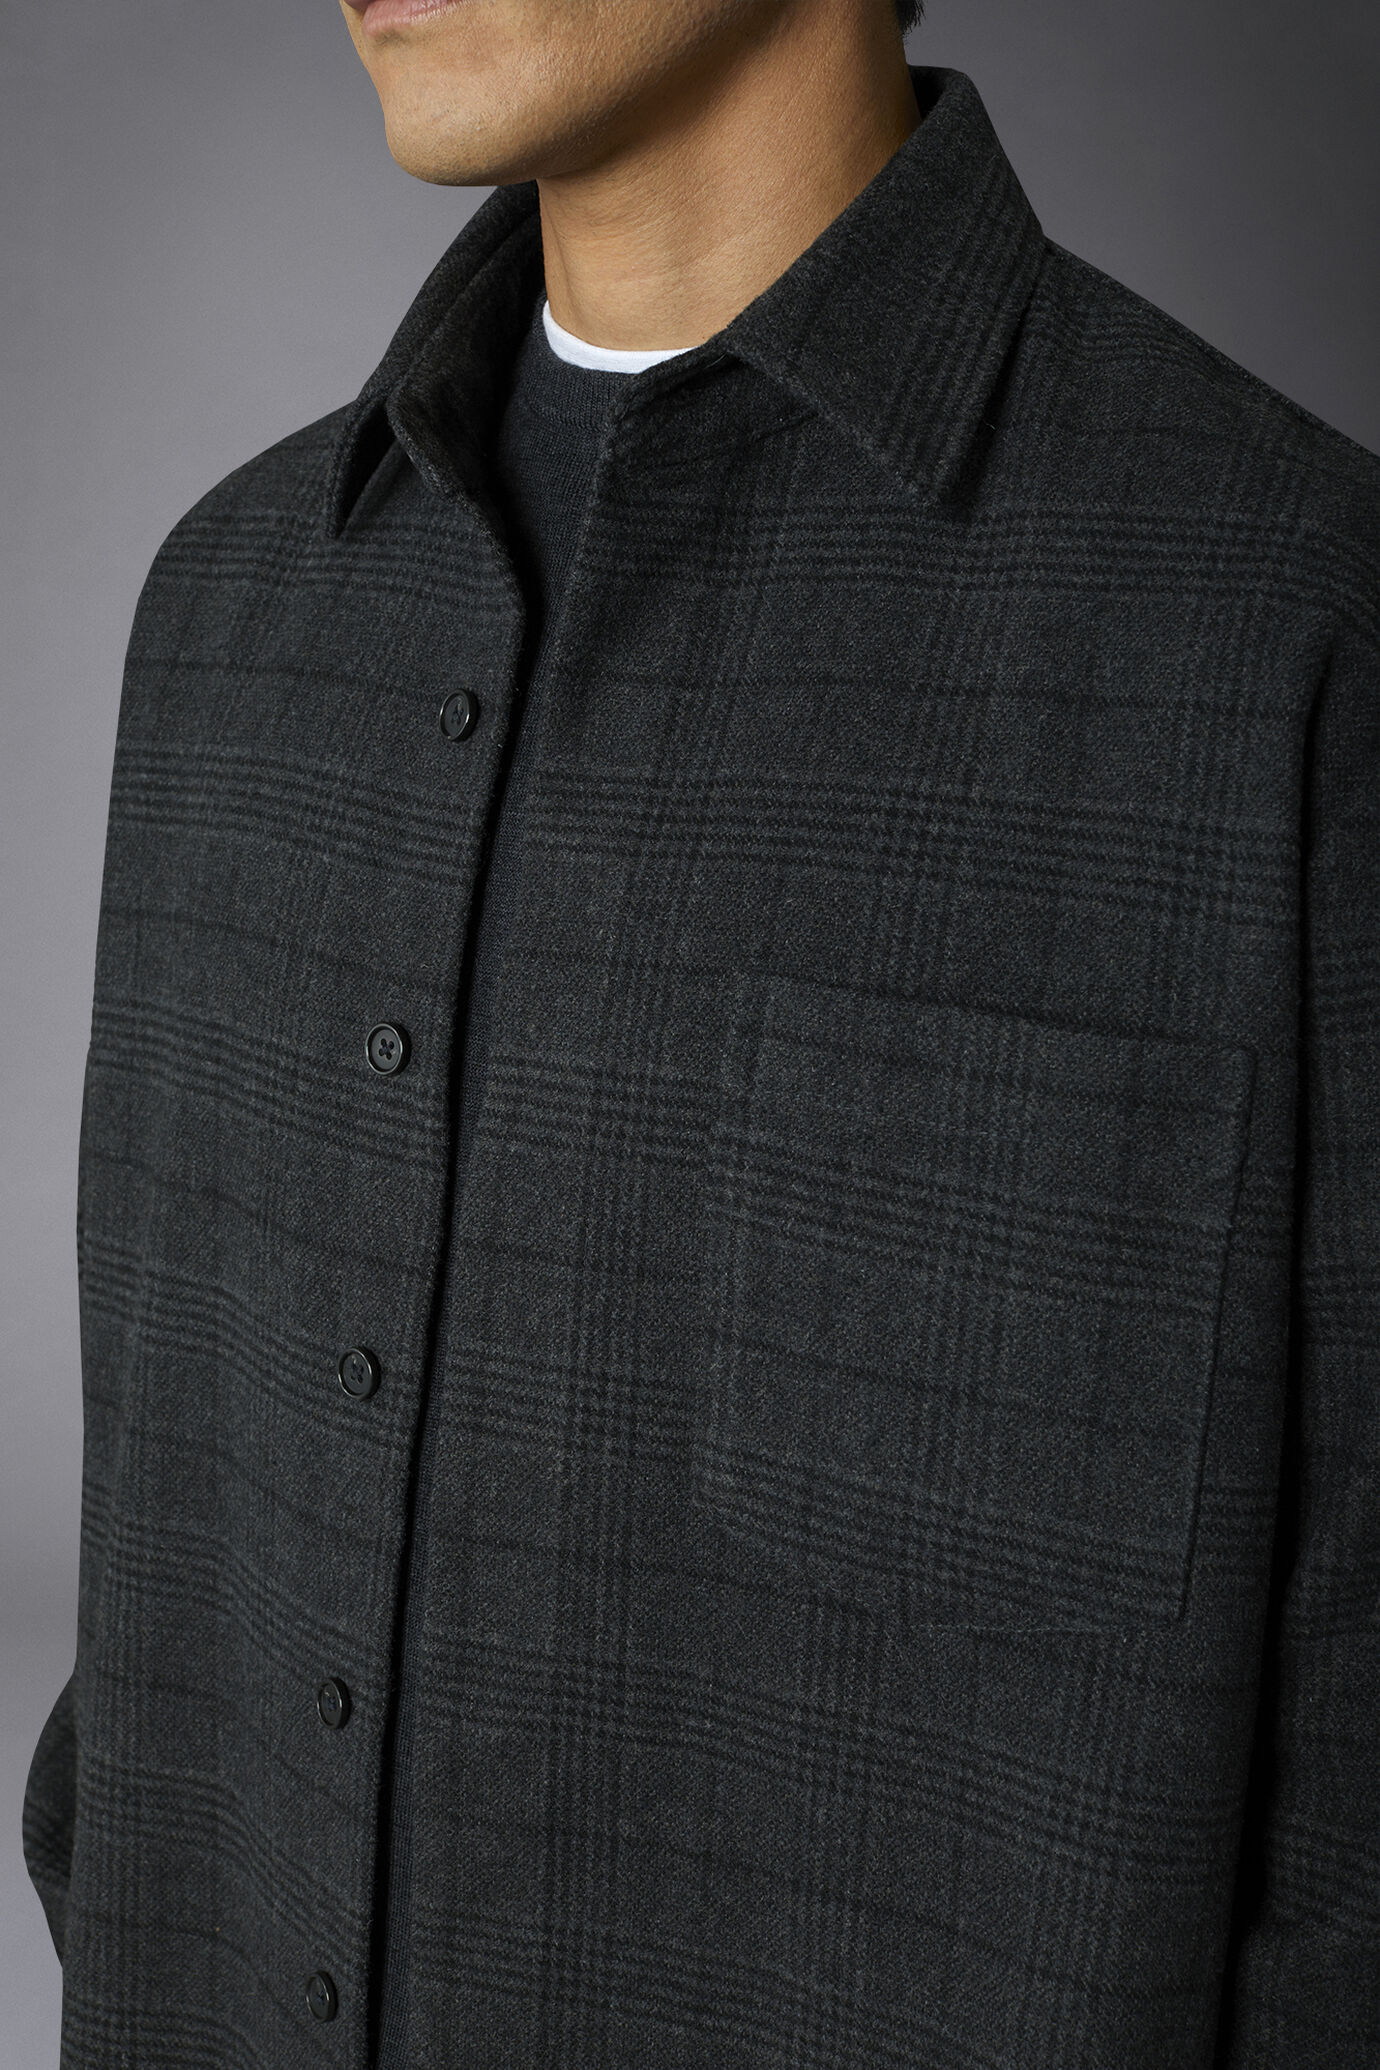 Men's shirt jacket wool blend checked fabric regular fit image number 2